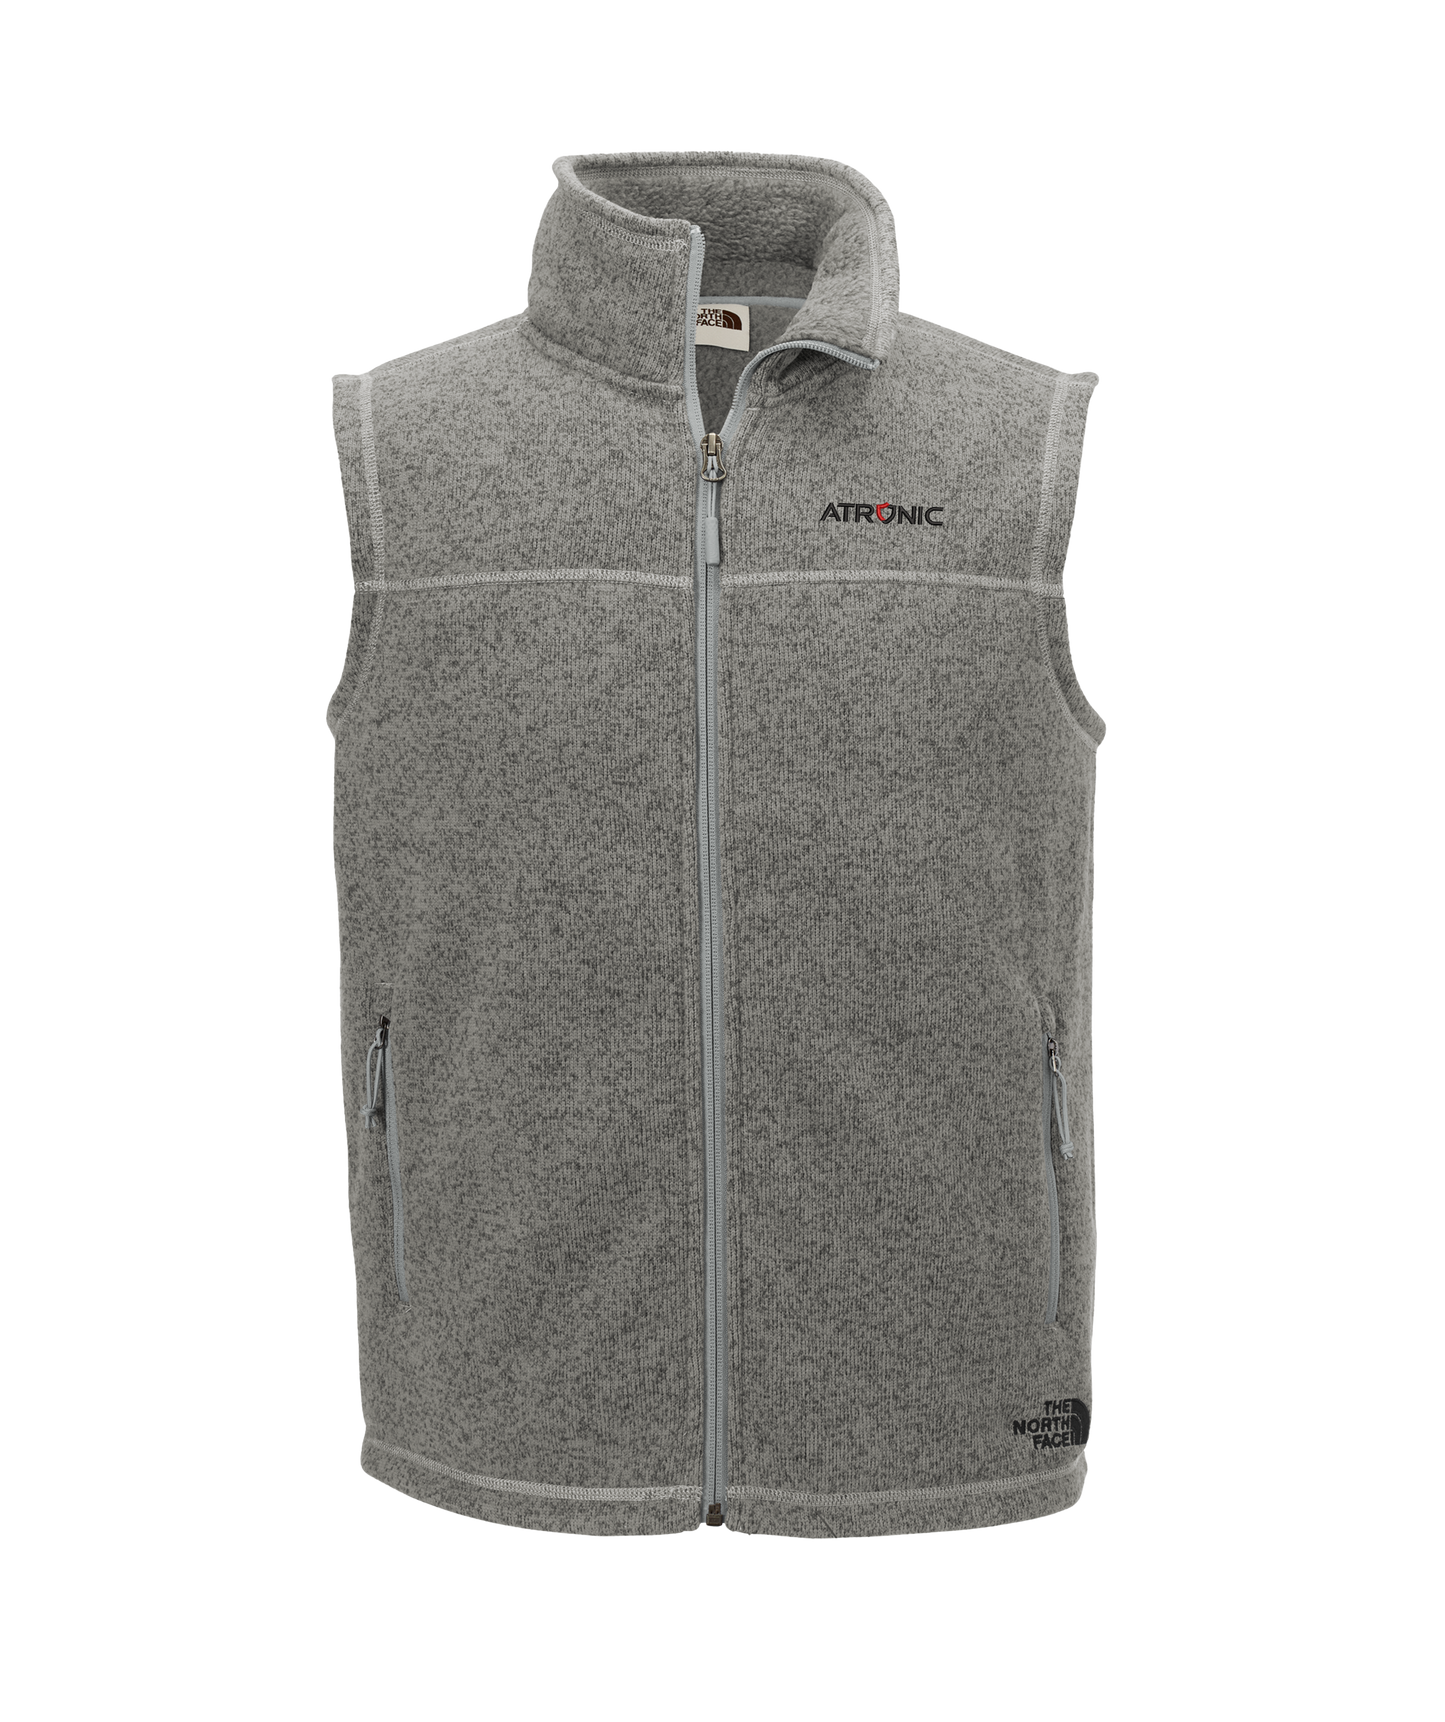 The North Face ® Sweater Fleece Vest